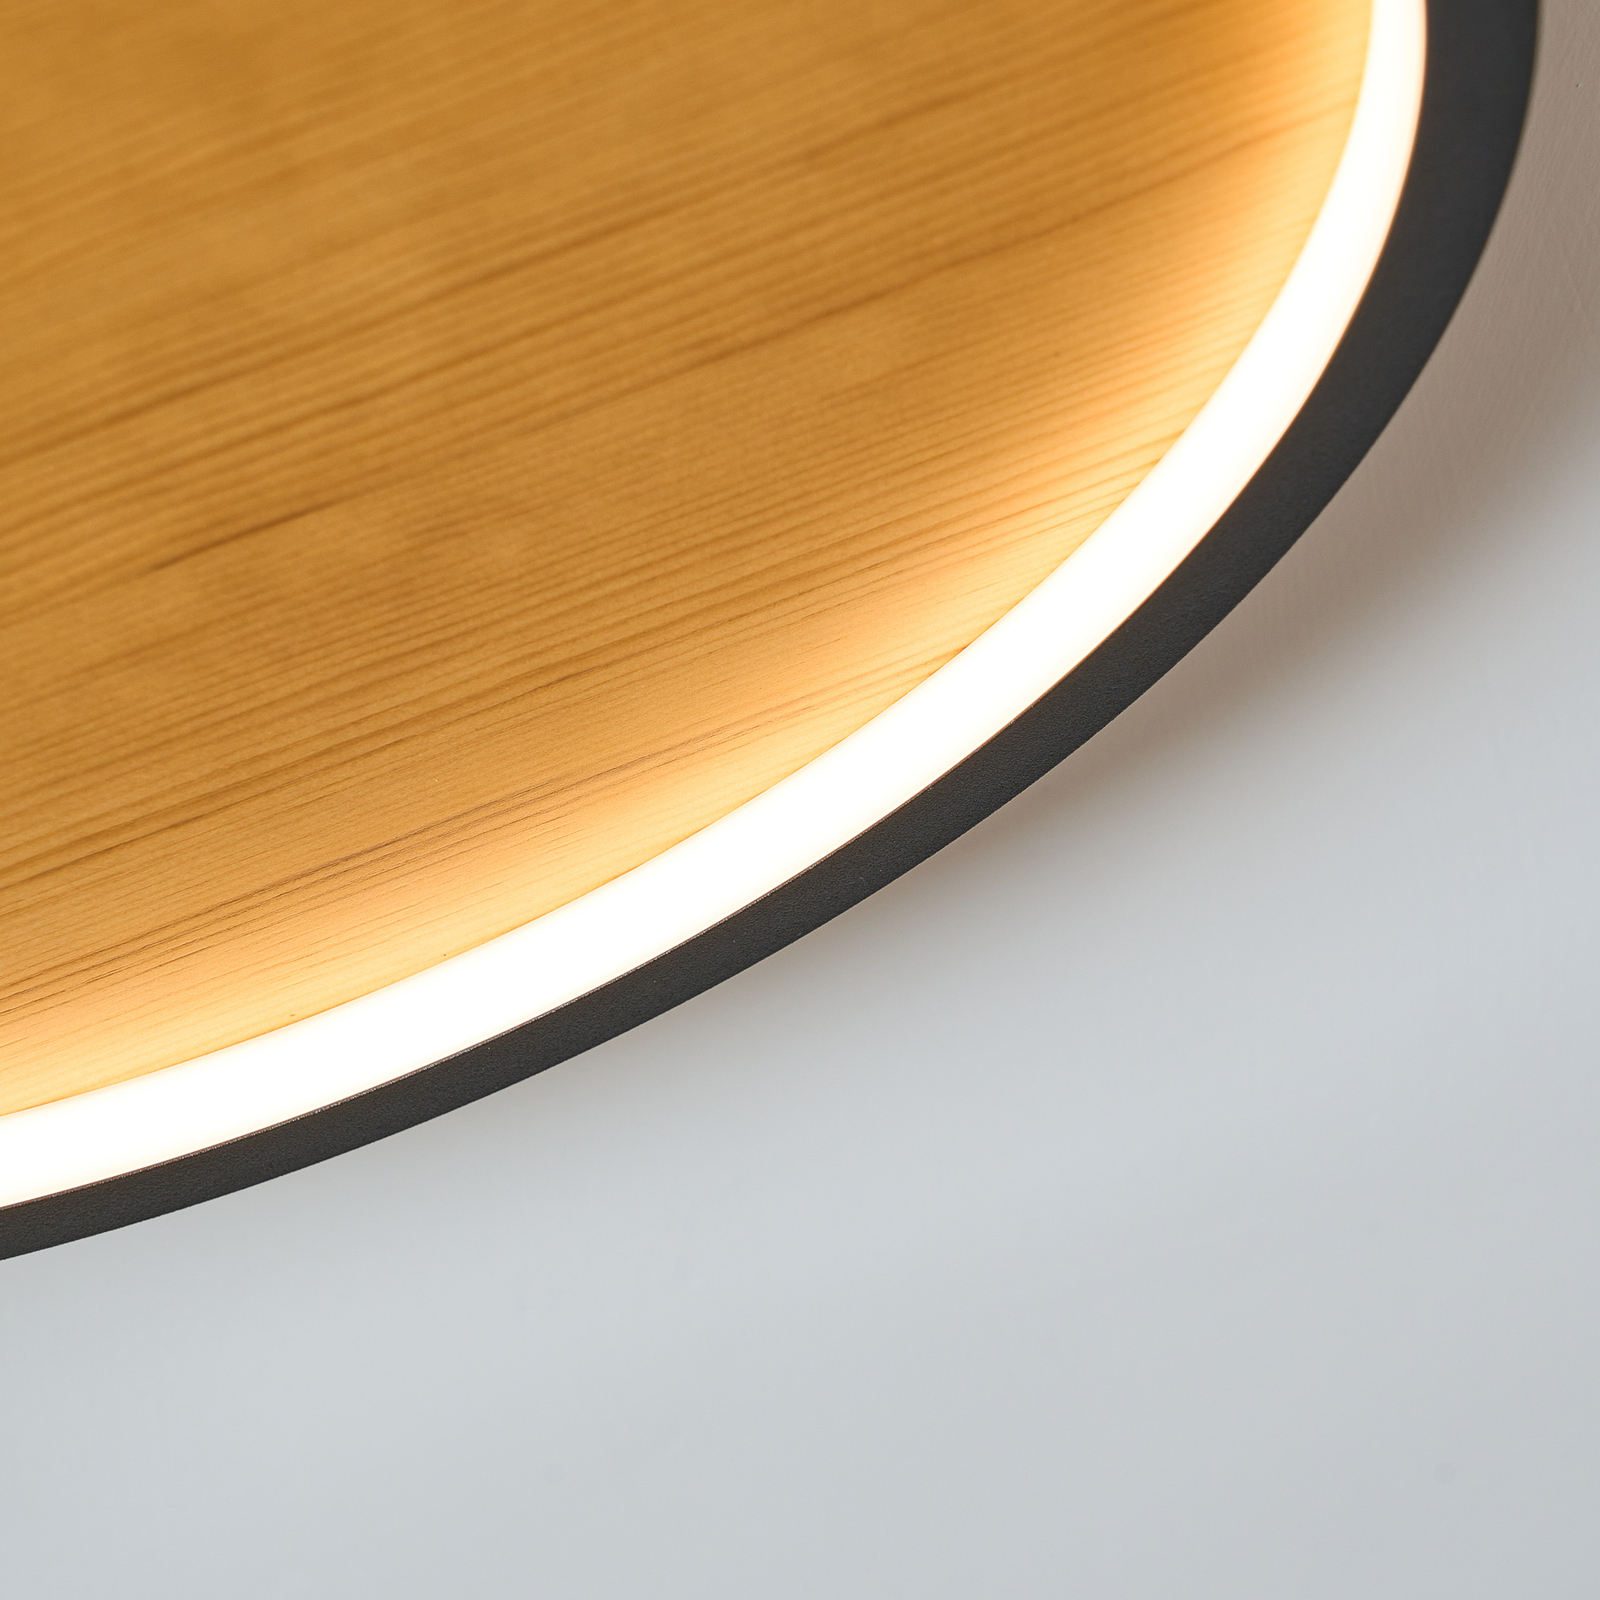 Kiru LED stropné svietidlo, borovica, dĺžka 63,2 cm, drevo